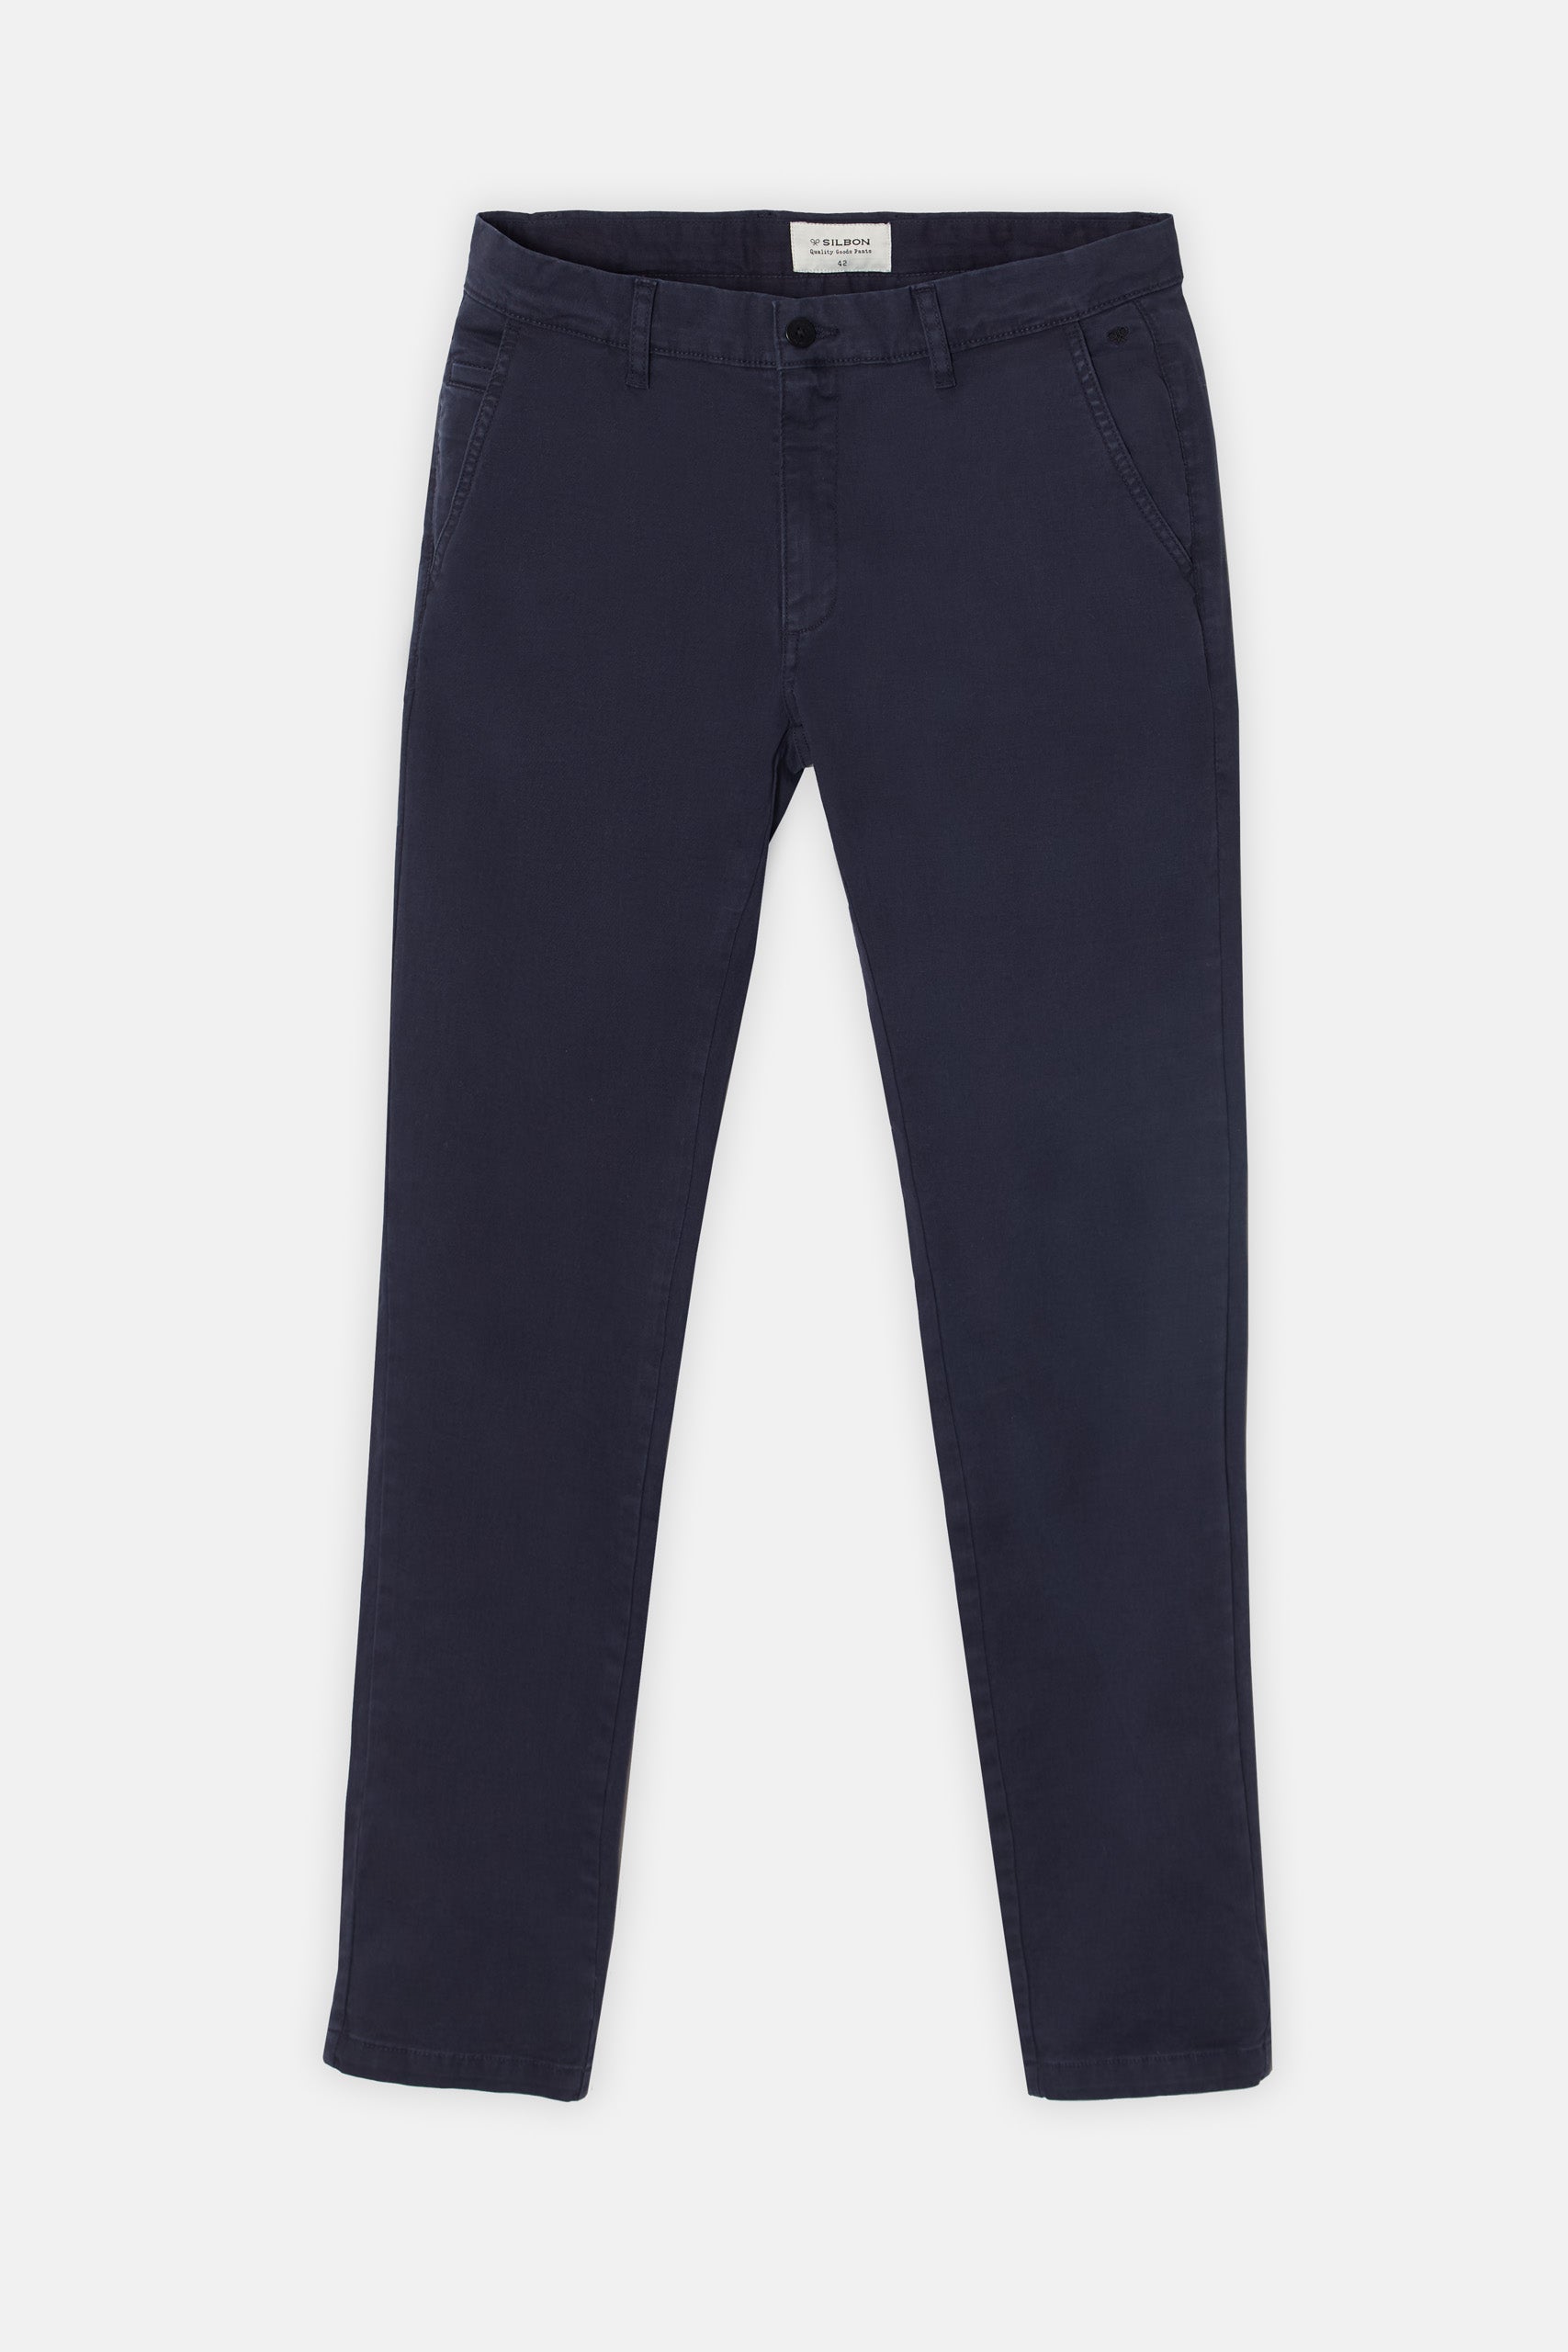 Pantalon sport chino azul oscuro